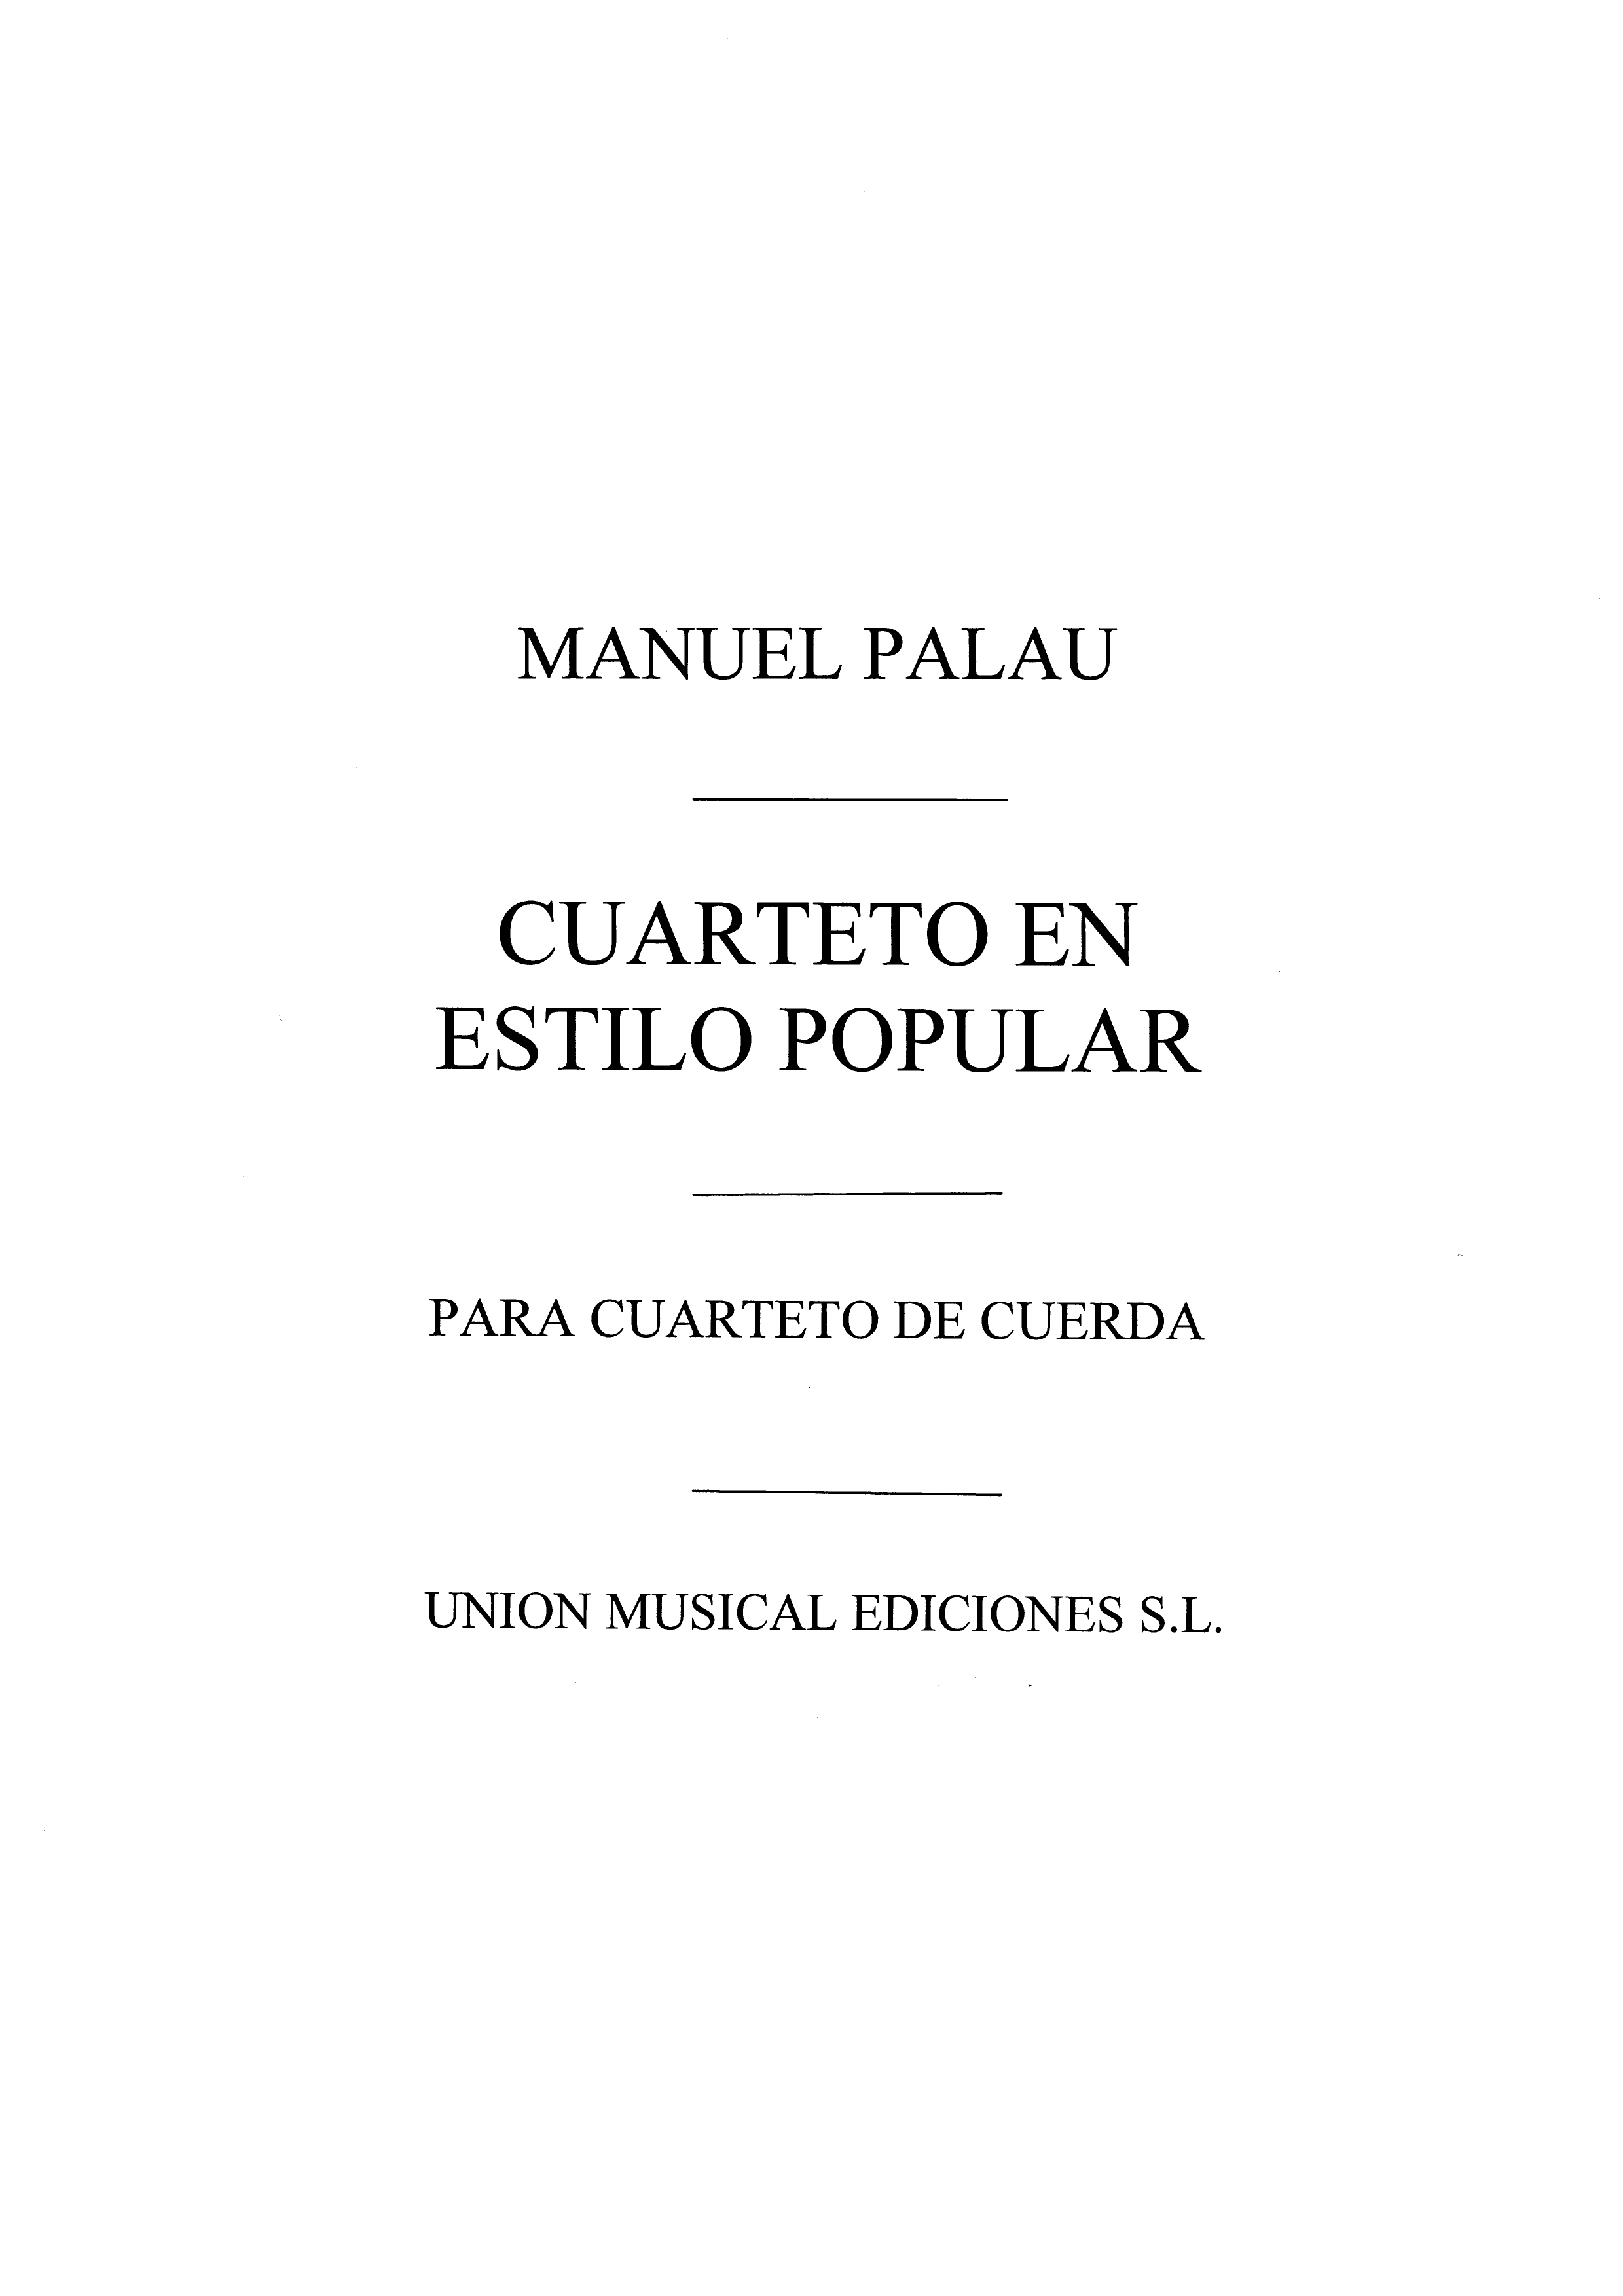 Manuel Palau: Cuarteto En Estilop Popular String Quartet: String Quartet